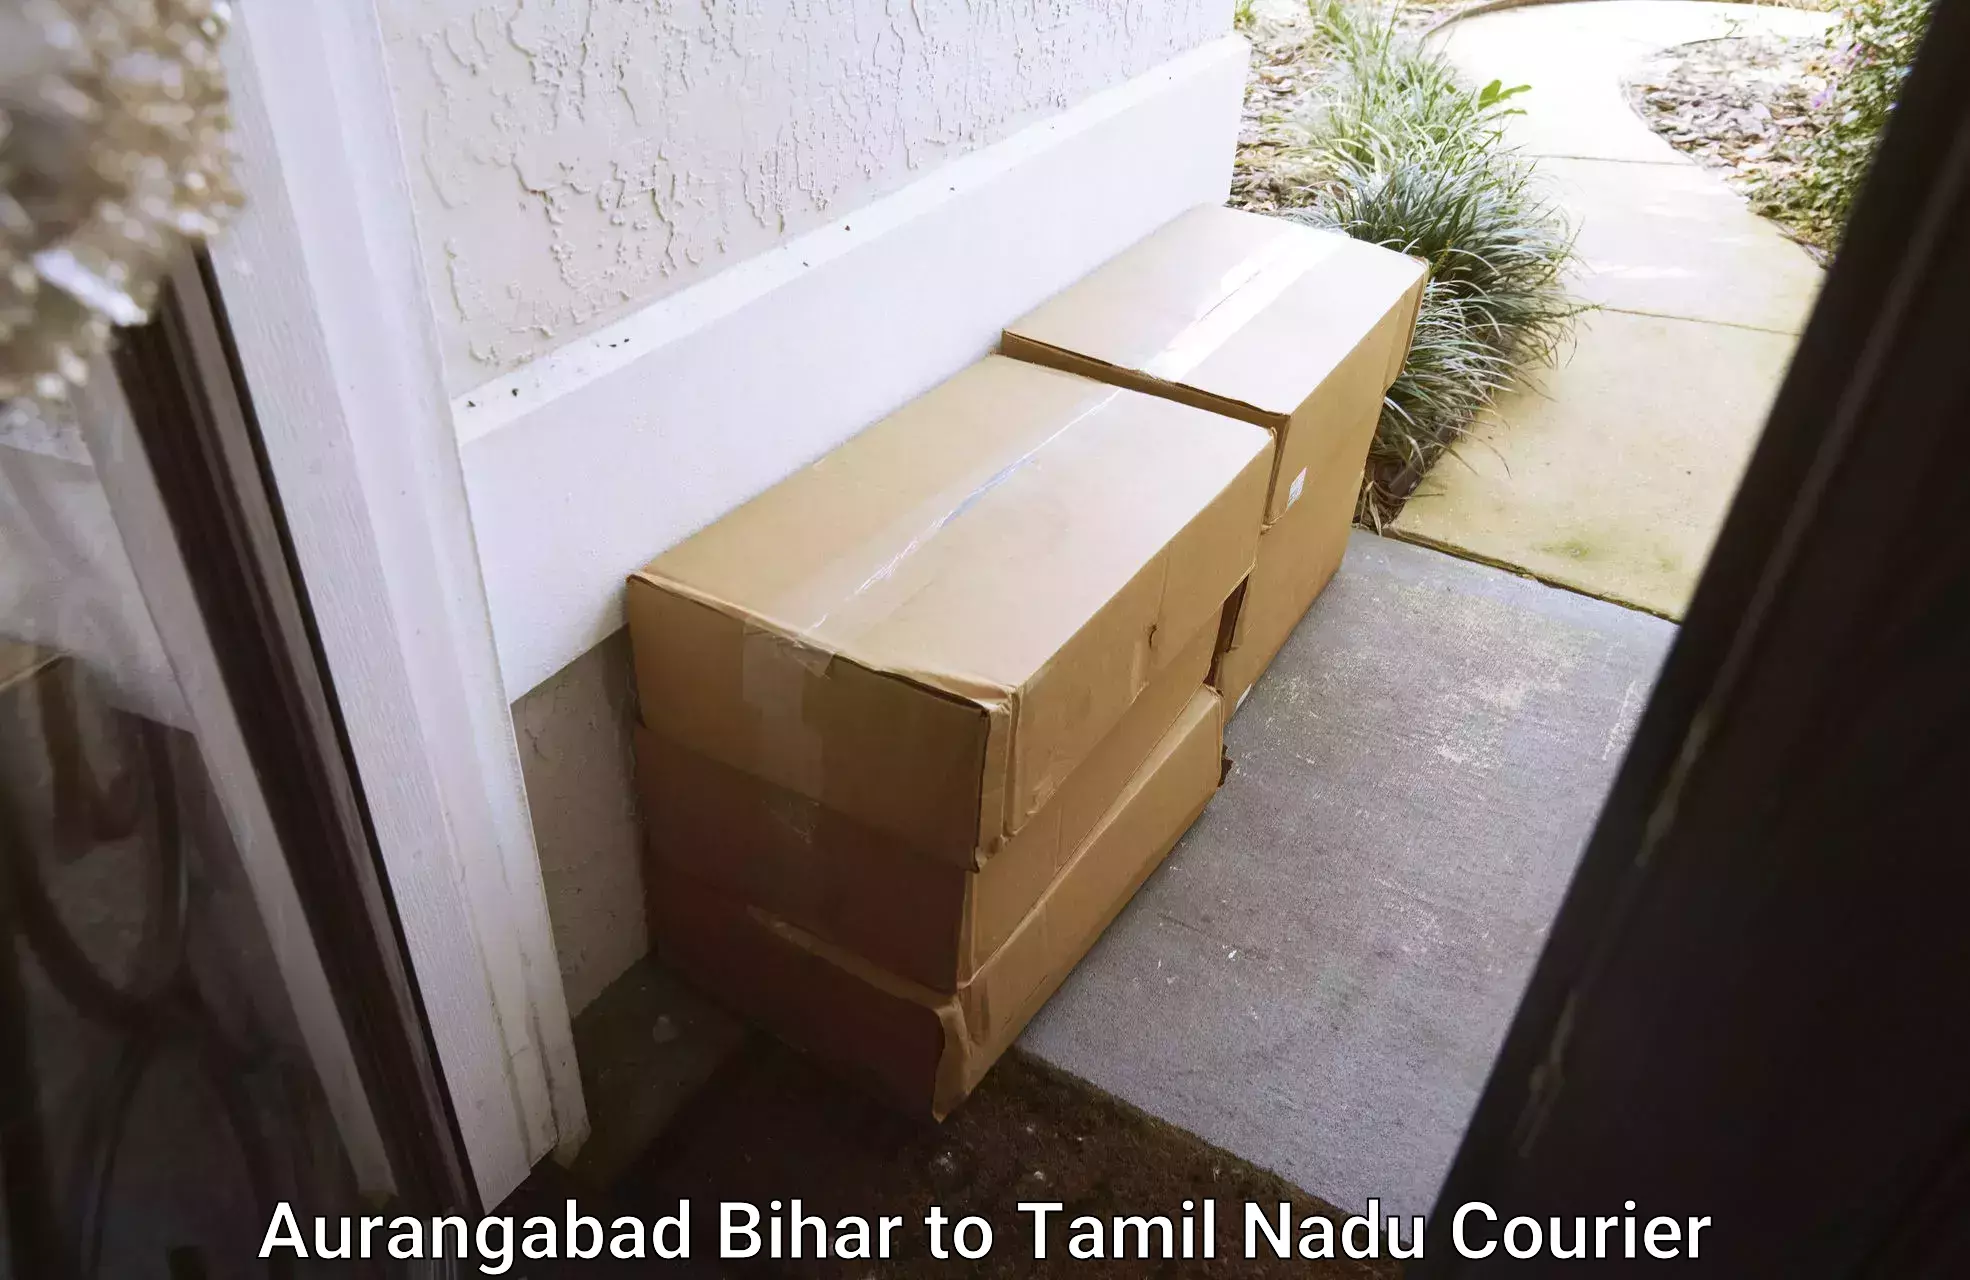 Home goods moving company Aurangabad Bihar to Anthiyur